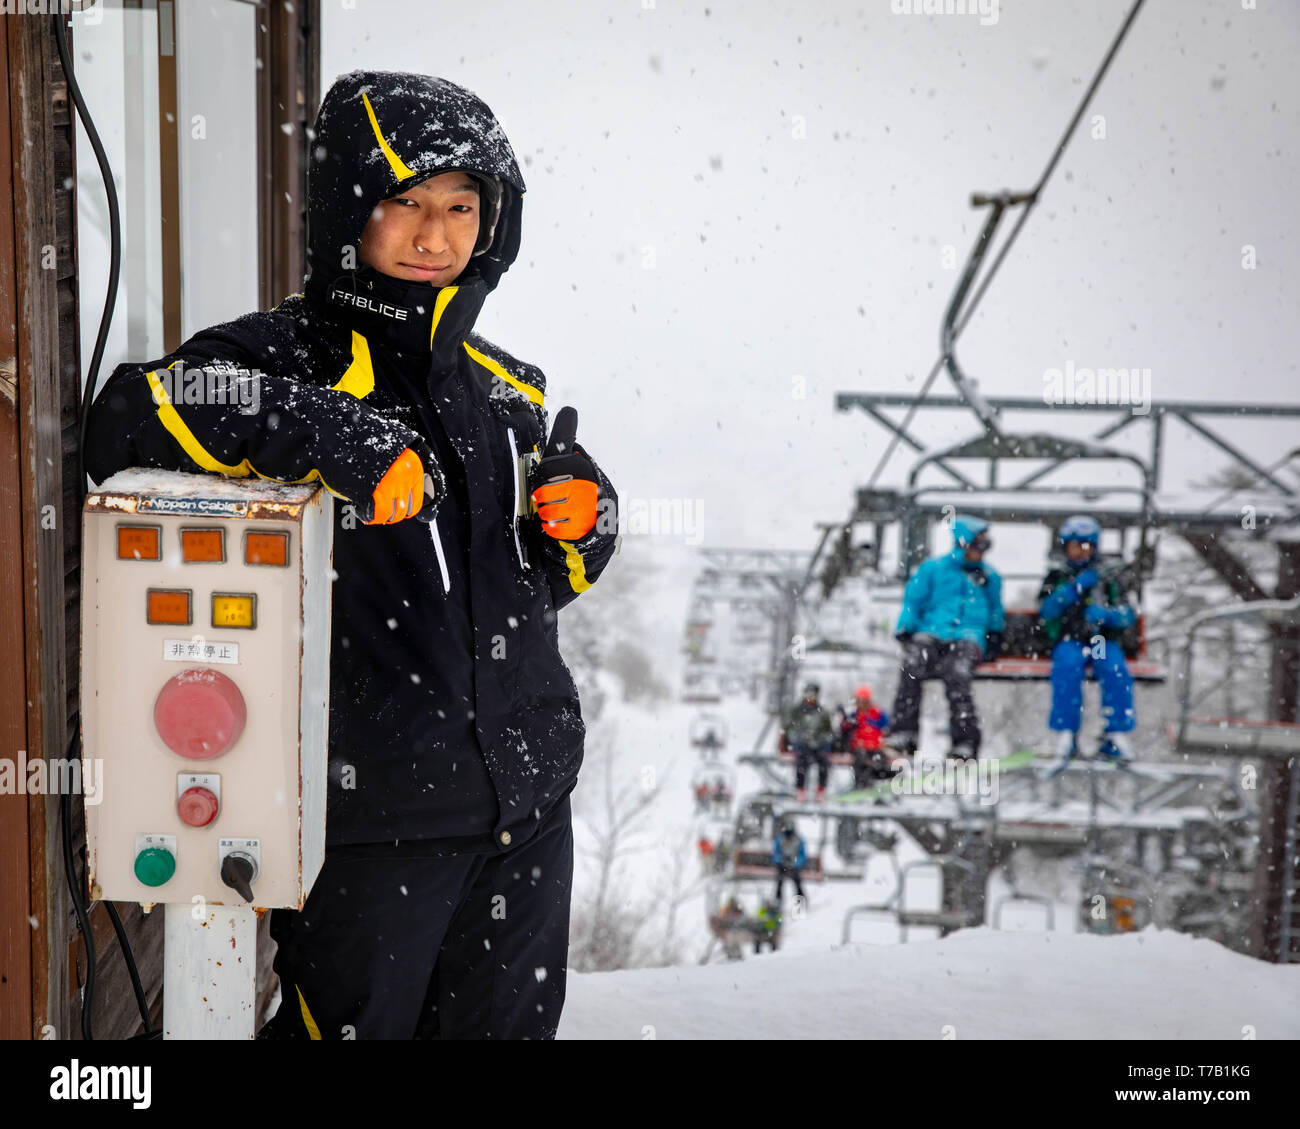 Ski lift worker, Hakuba, Japan Stock Photo